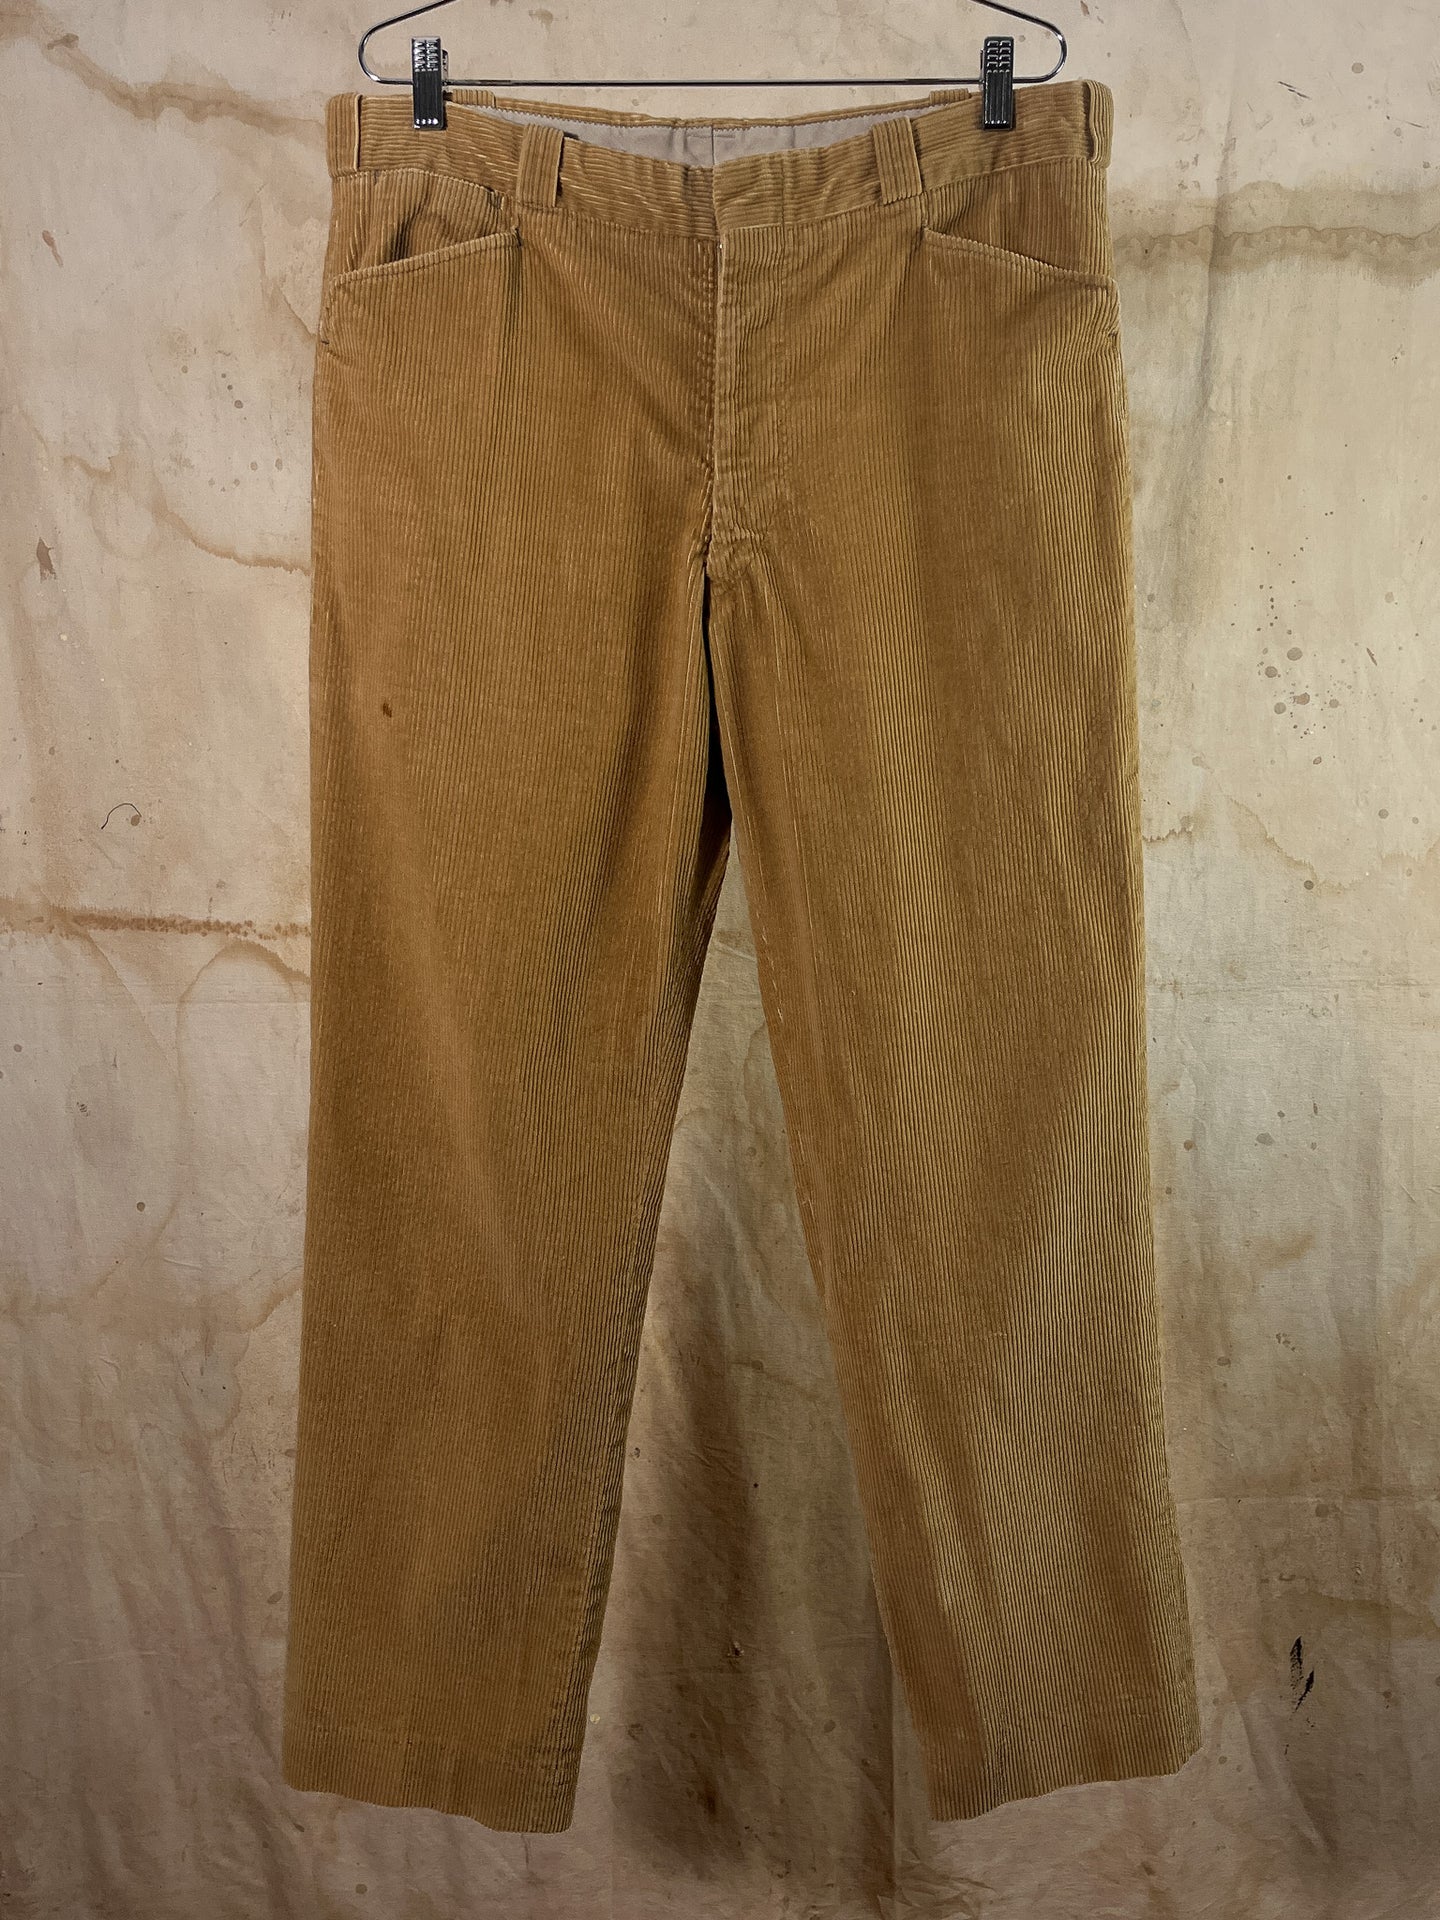 Eddie Bauer Tan Corduroy Trousers c. 1970s